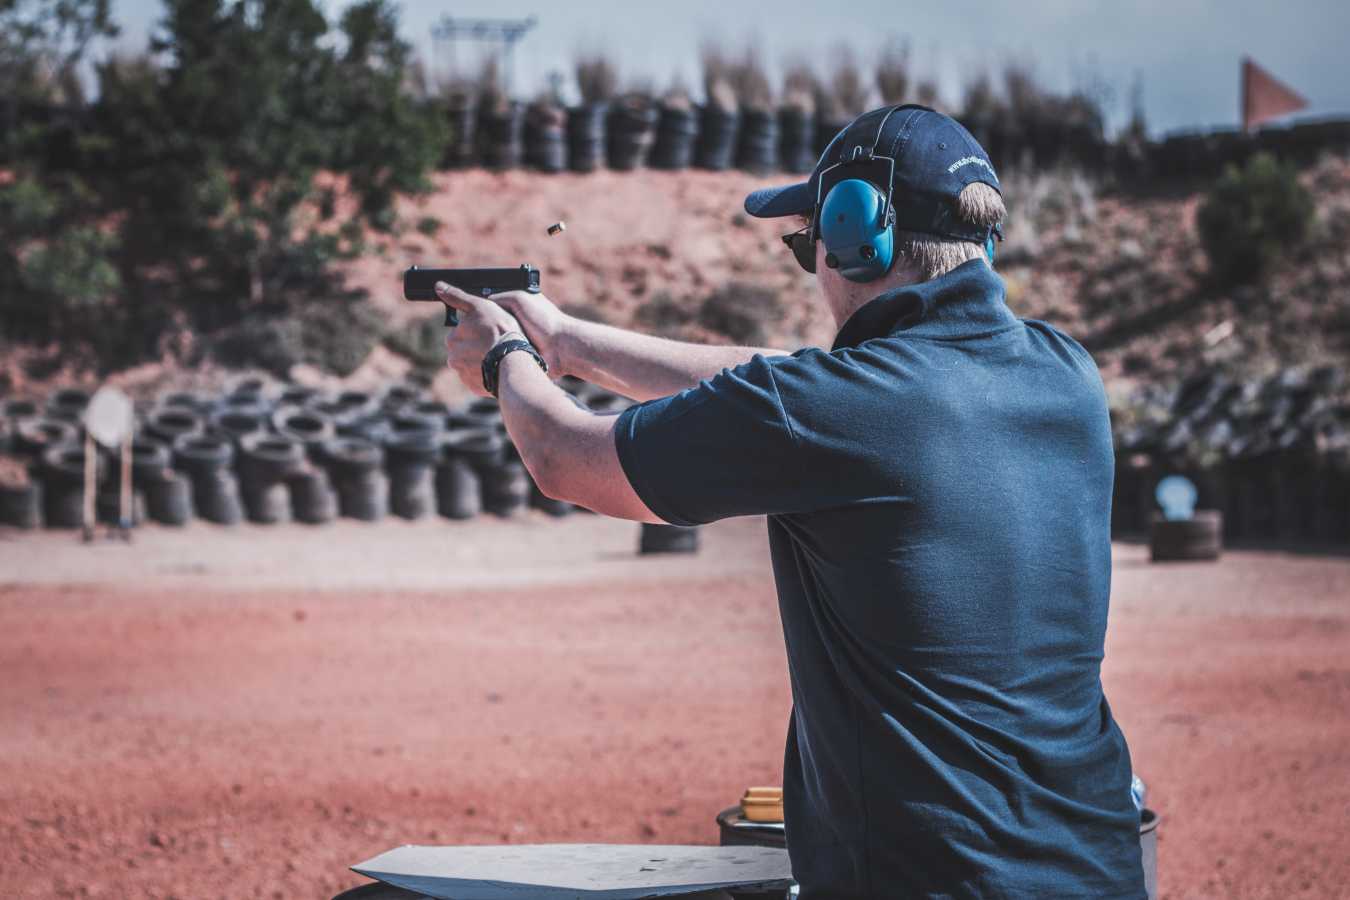 gun range action shot ppc for online gun shops